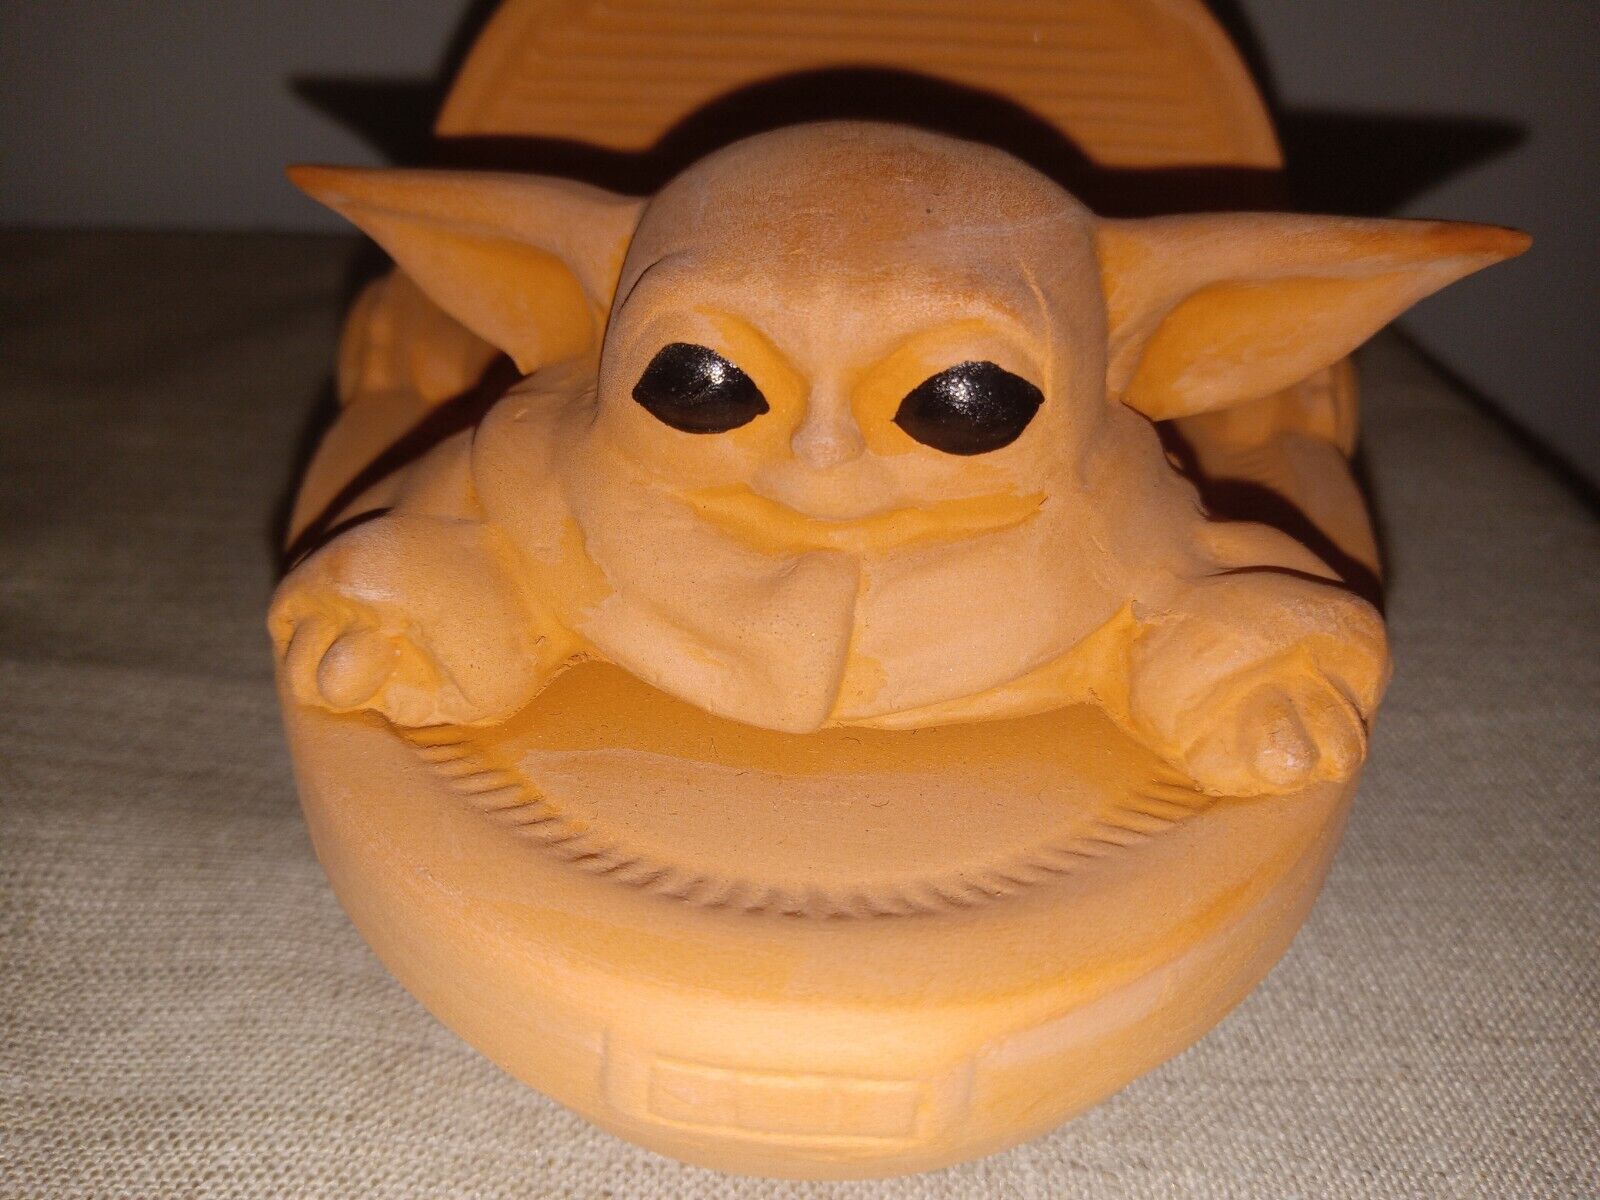 Chia Pet Star Wars The Child Decorative Planter The Mandalorian Baby Yoda Grogu